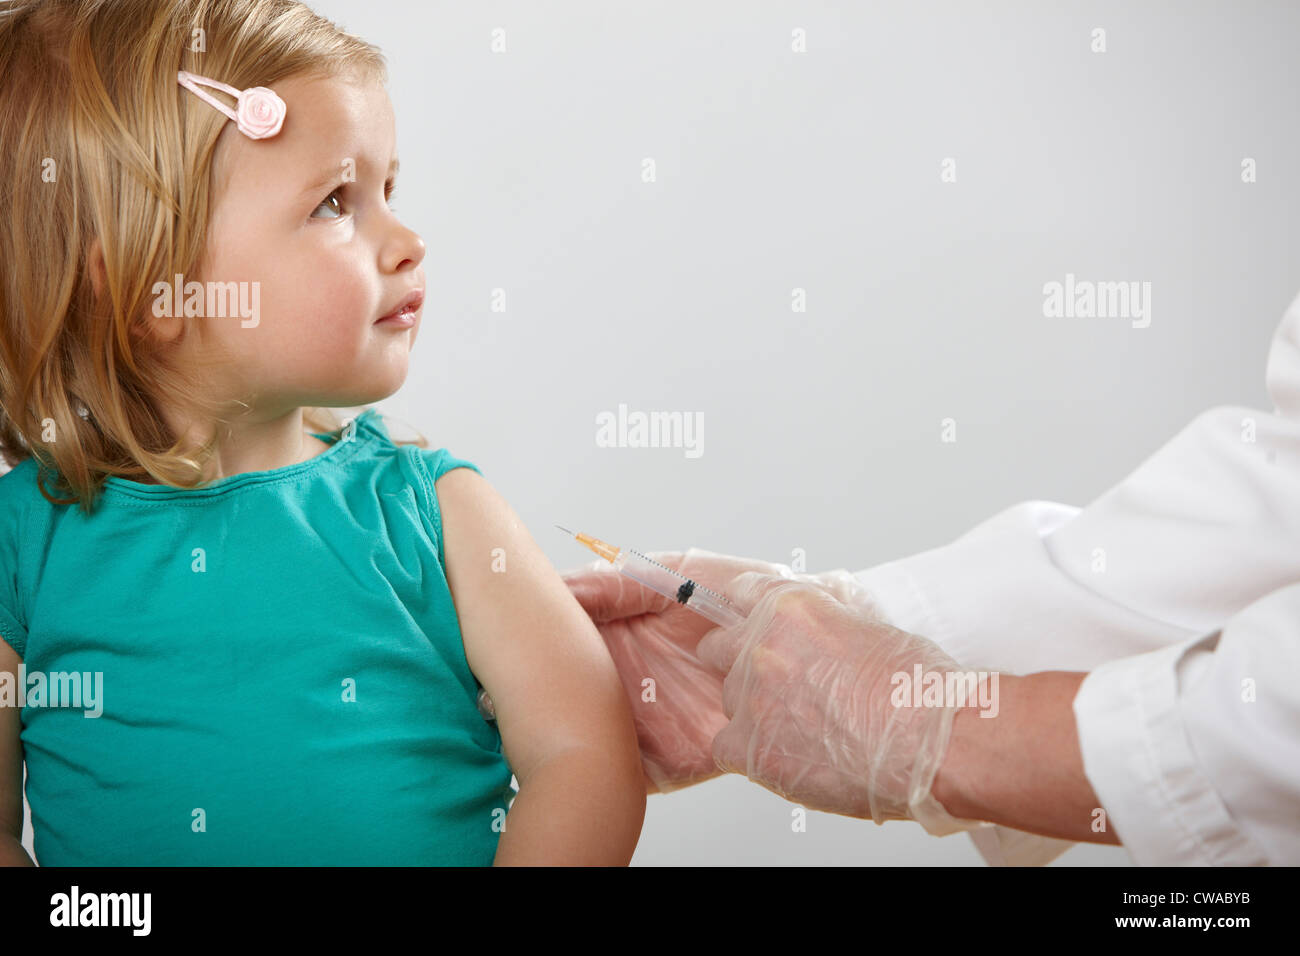 Girl having injection Stock Photo